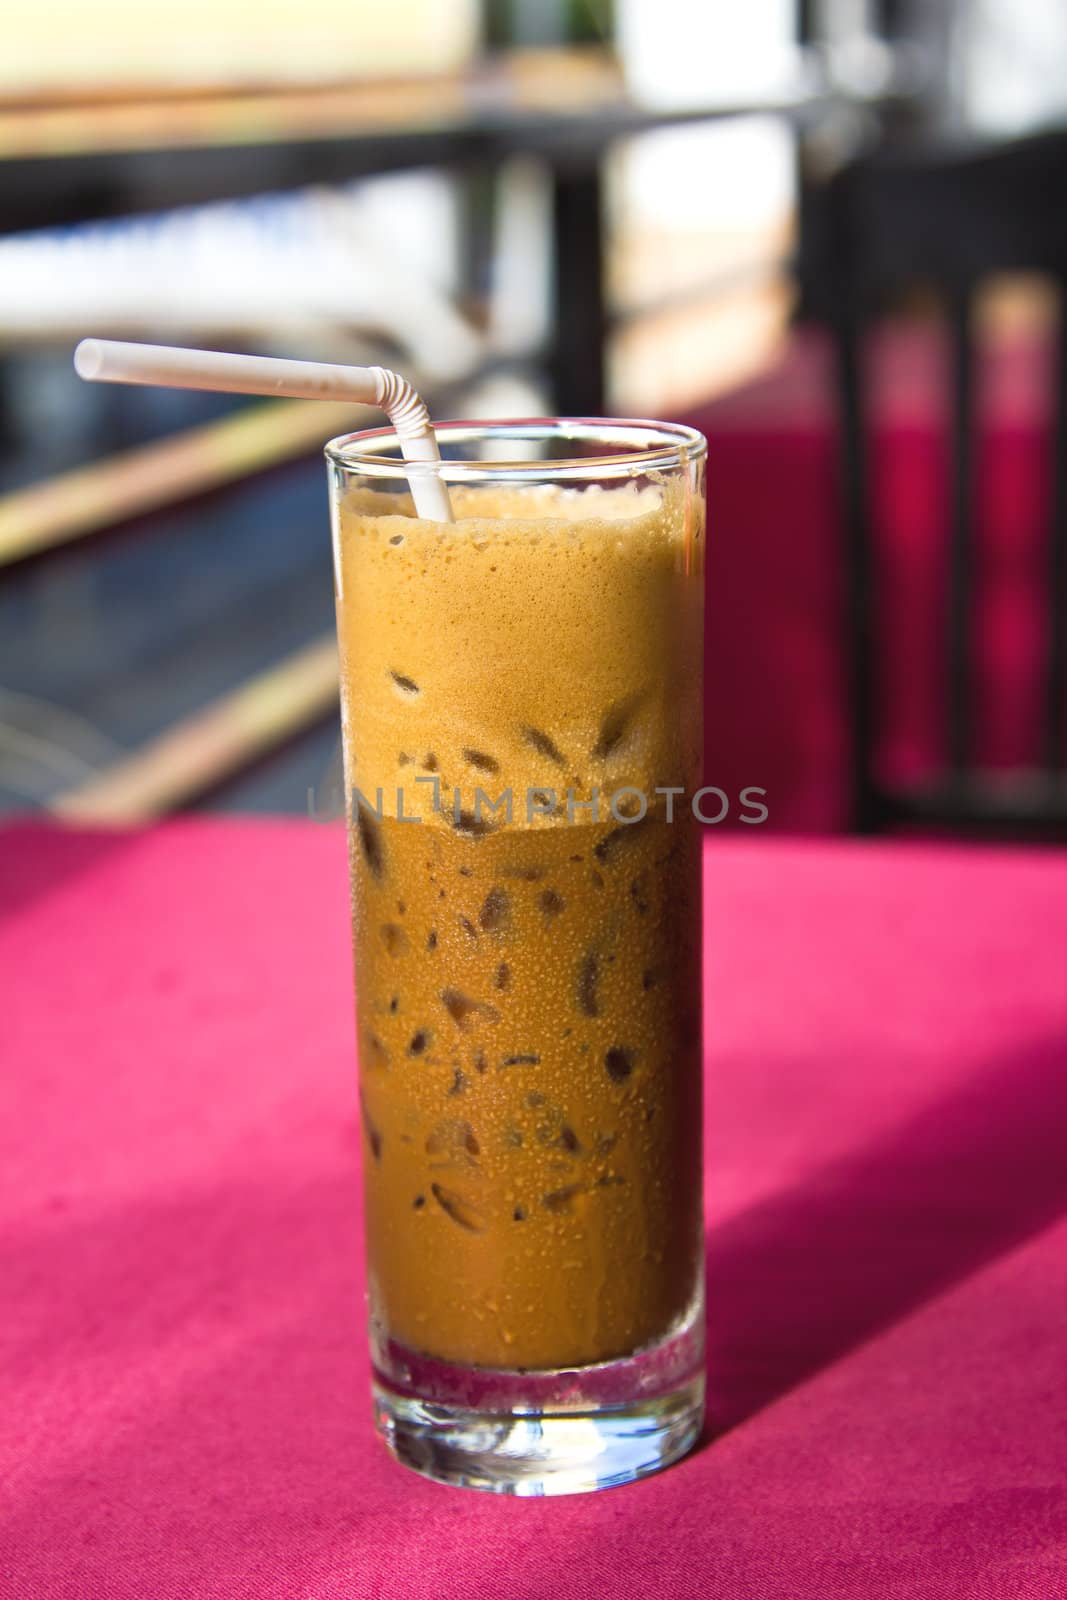 Vietnamese's Ice coffee by vanillaechoes